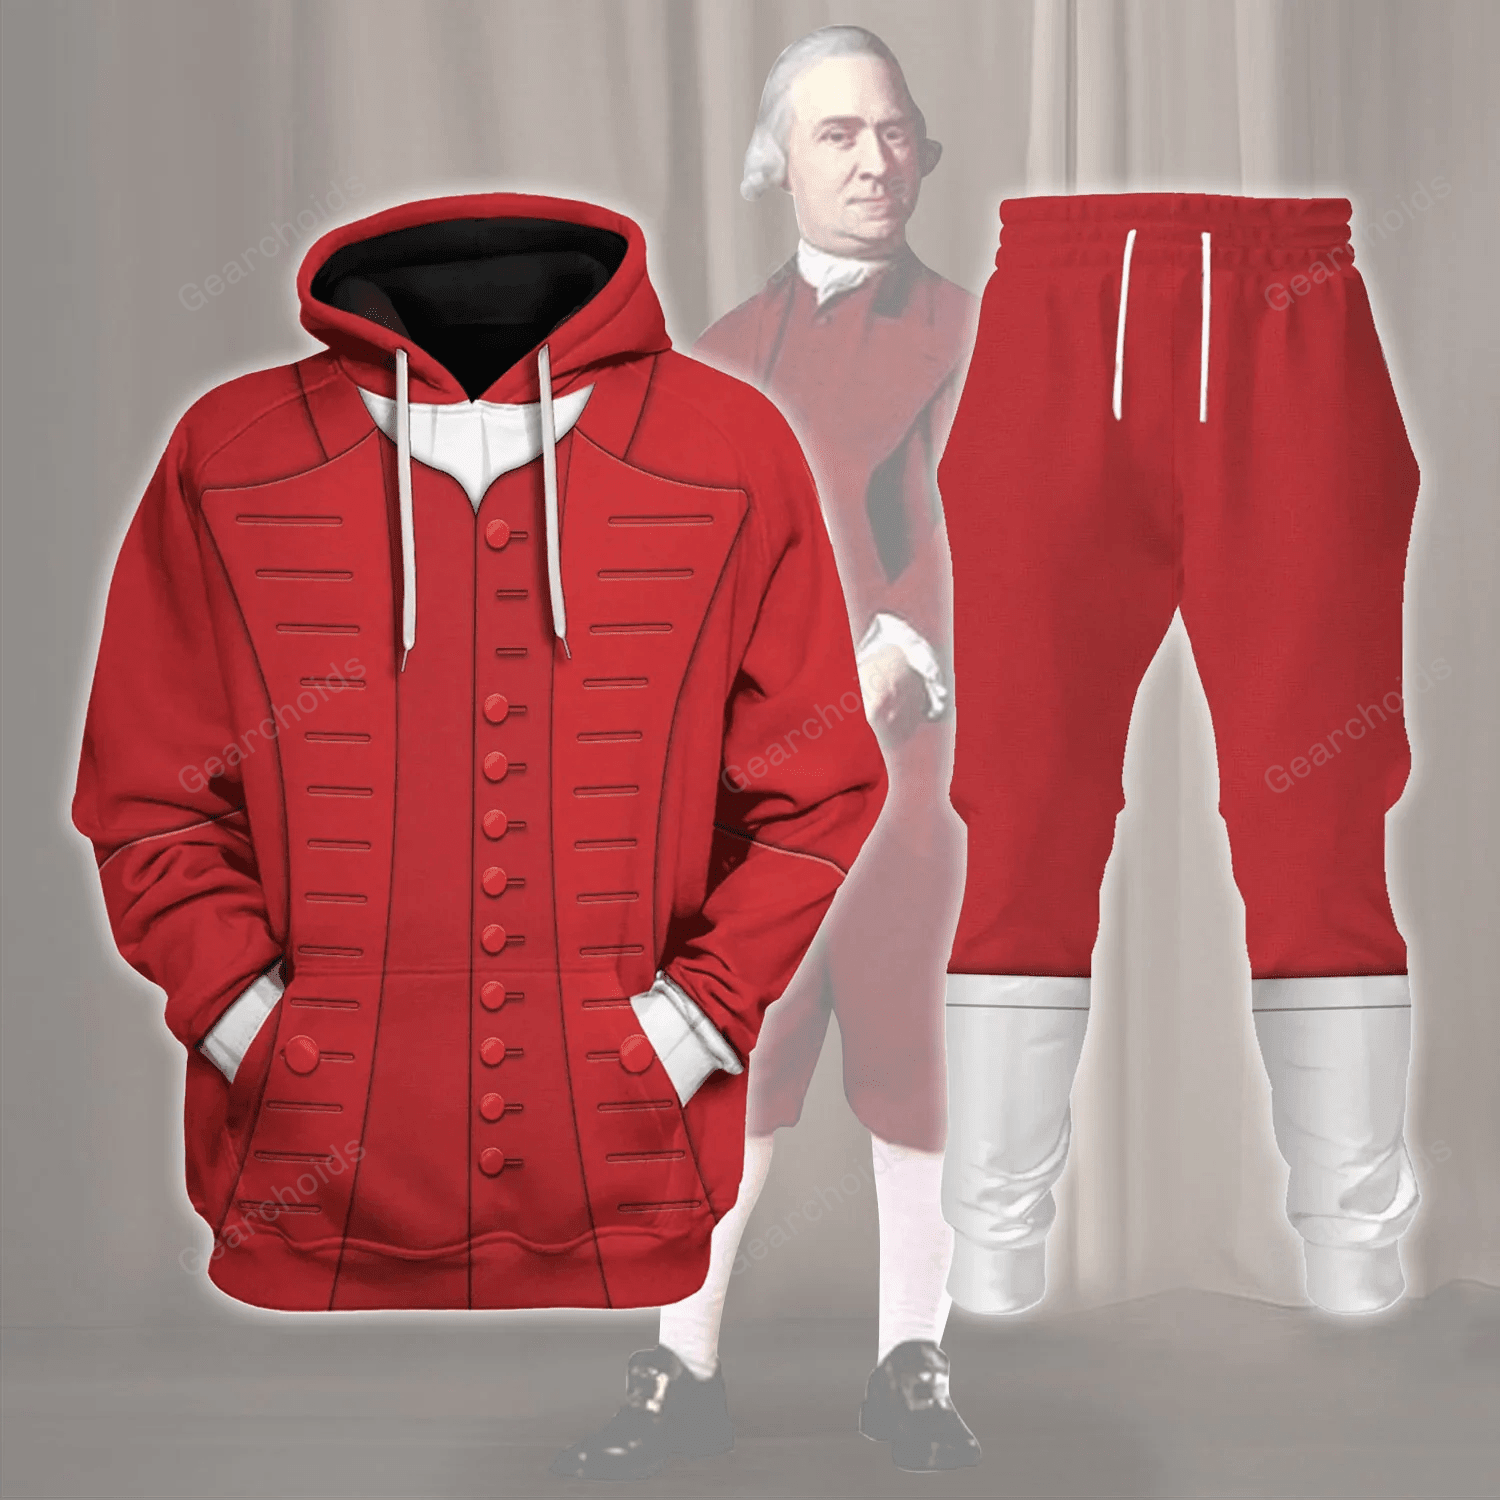 Samuel Adams Founding Father Of The United States Hoodie Sweatshirt Sweatpants